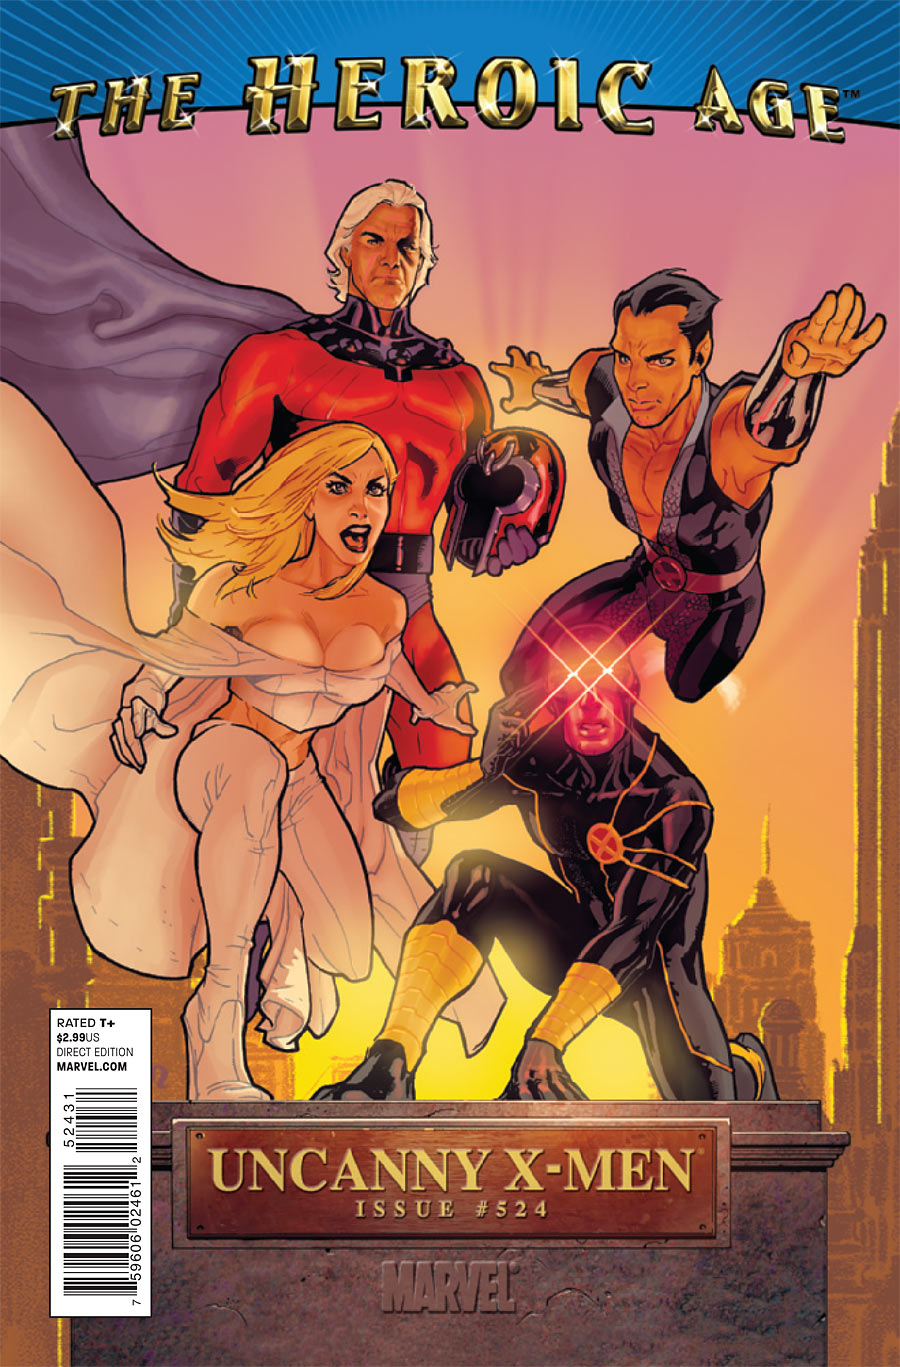 Uncanny X-Men #524 (Heroic Age Variant Cover)